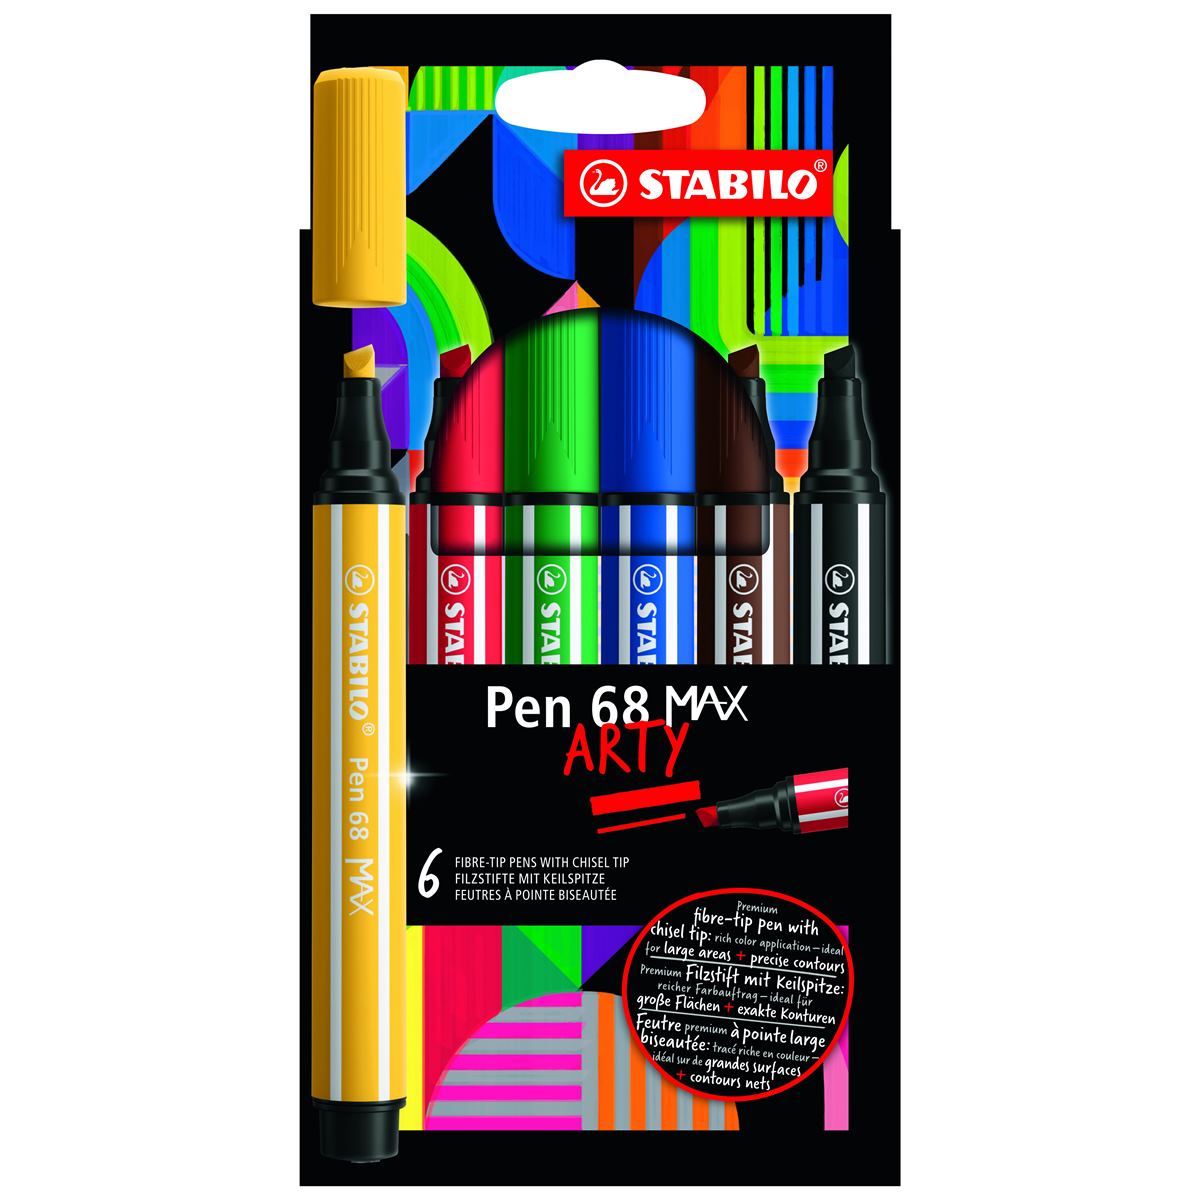 STABILO Pen 68 MAX Arty Fibre-tip Pens - Pack of 6